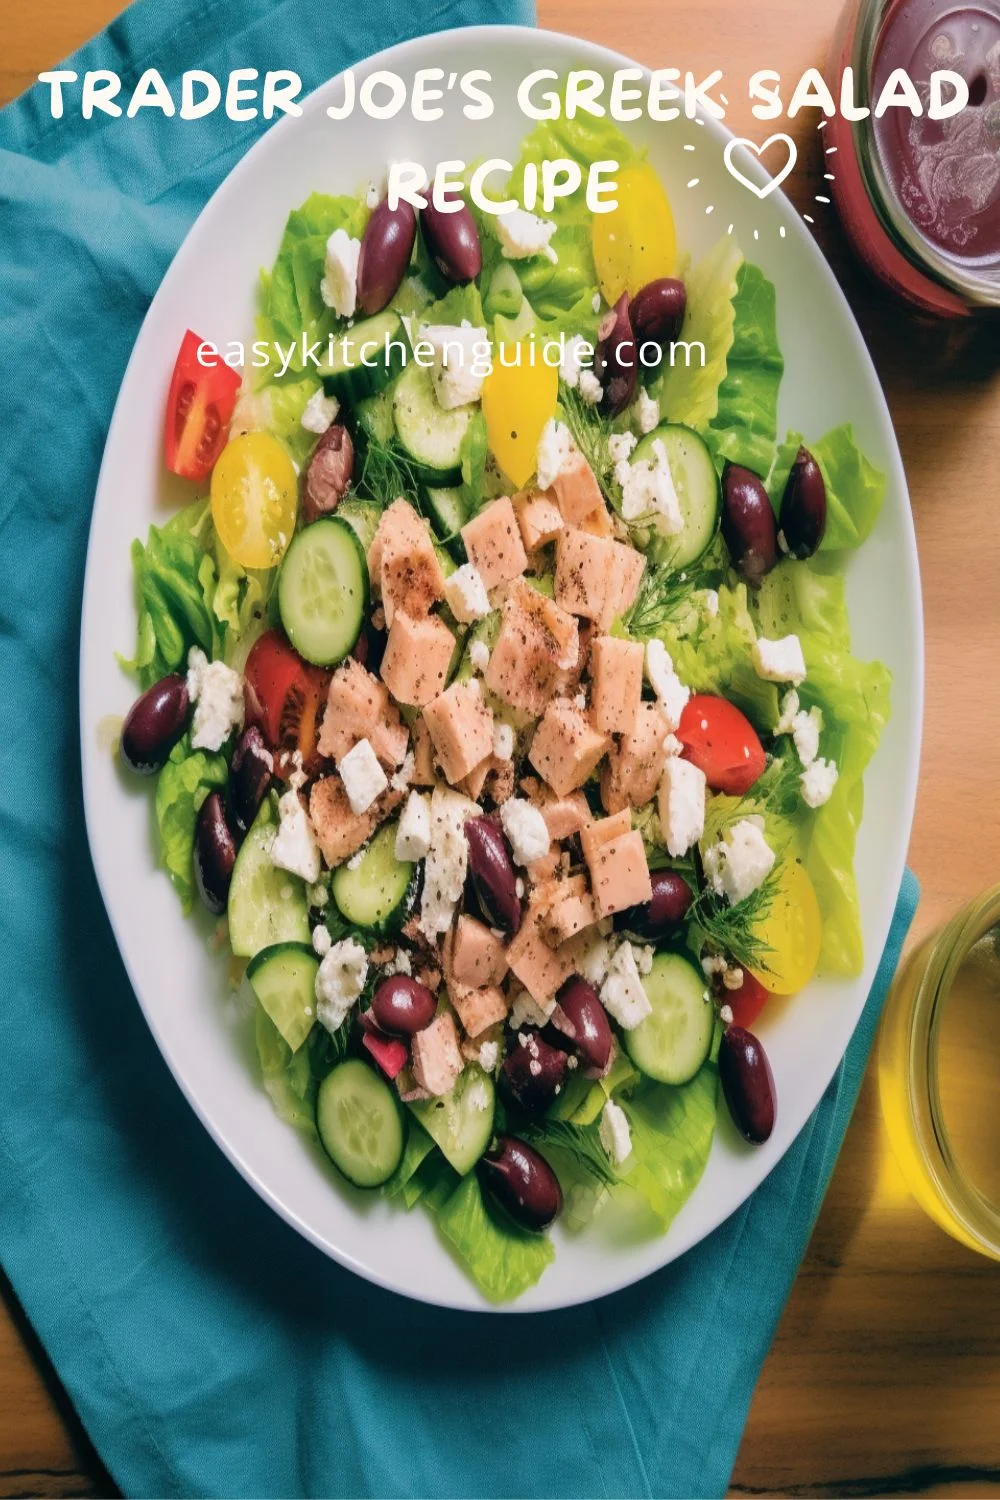 Trader Joe’s Greek Salad Recipe